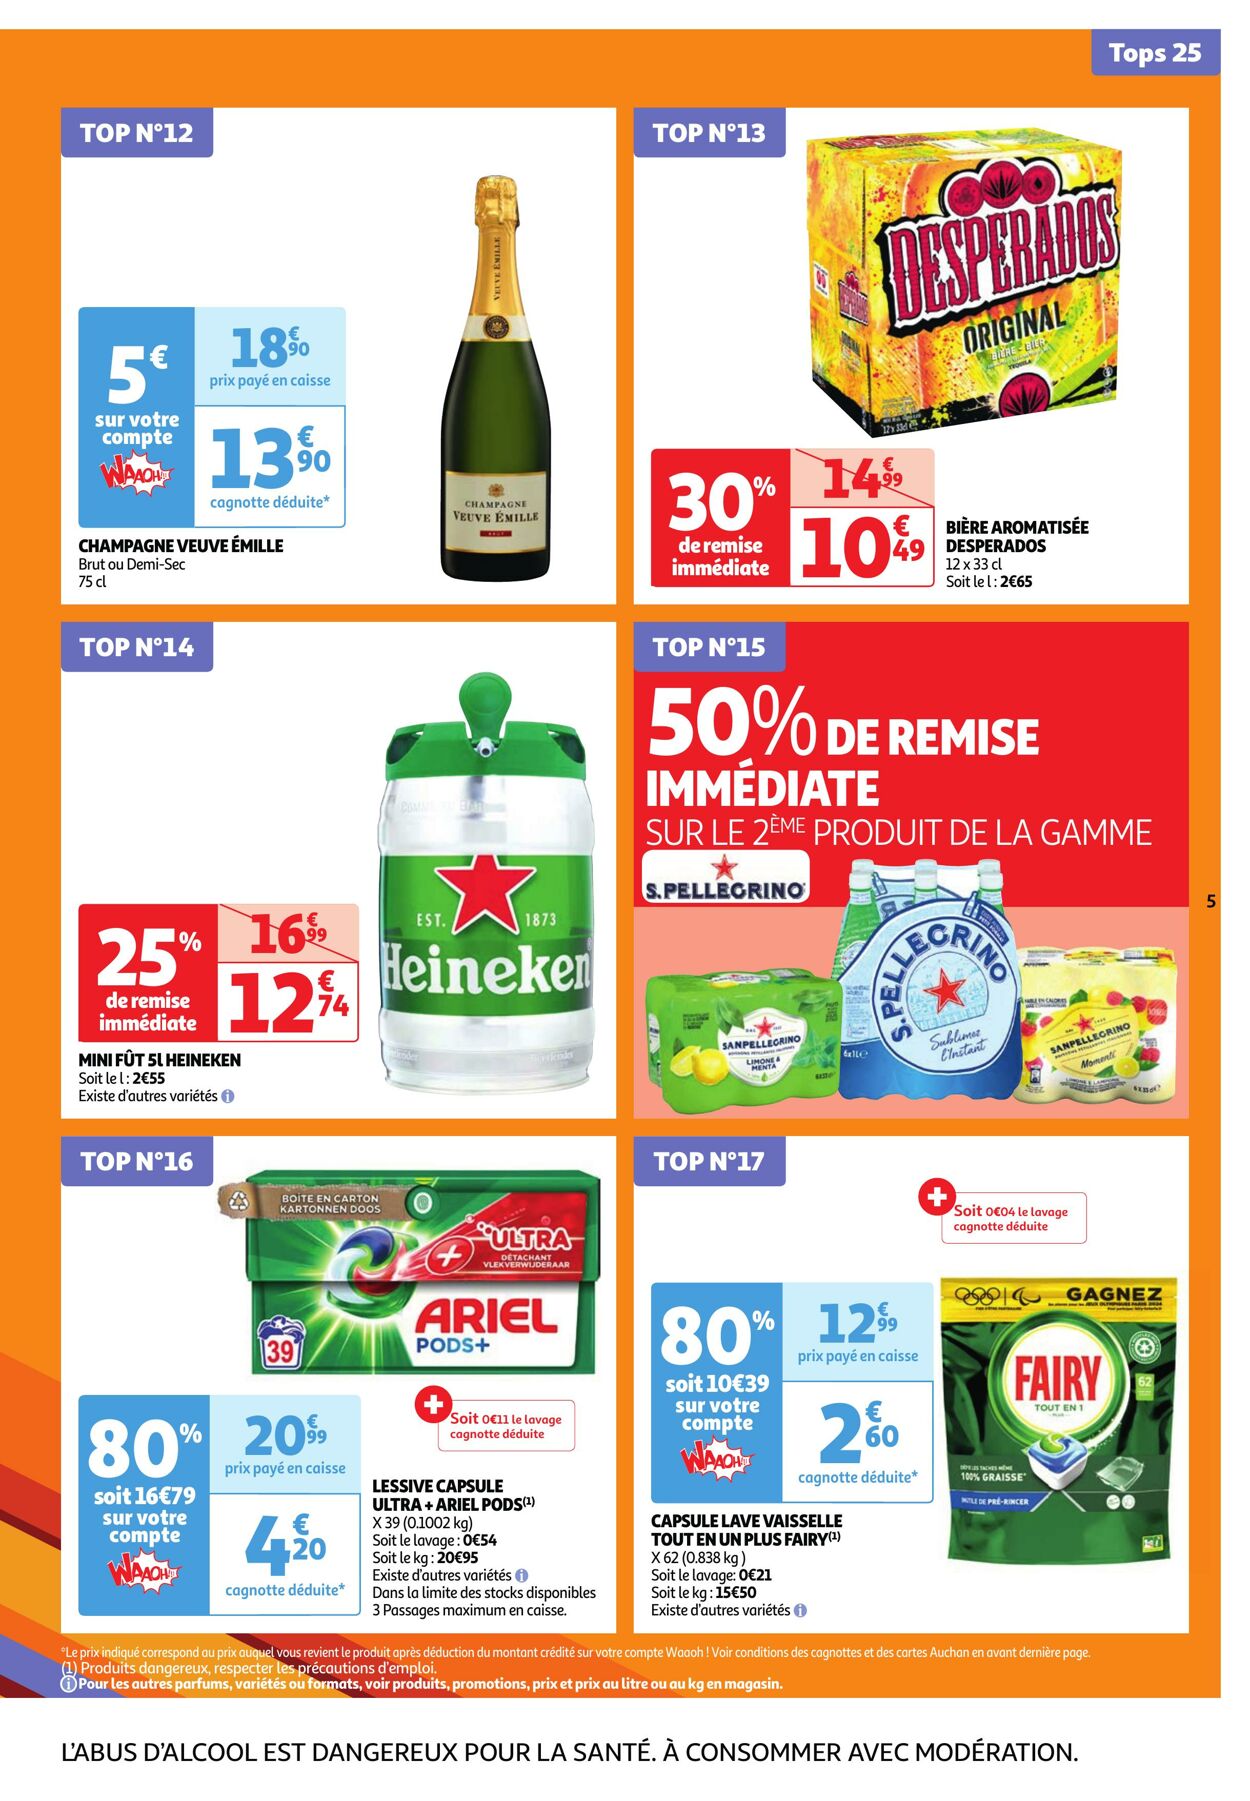 Catalogue Auchan 24.10.2023 - 30.10.2023